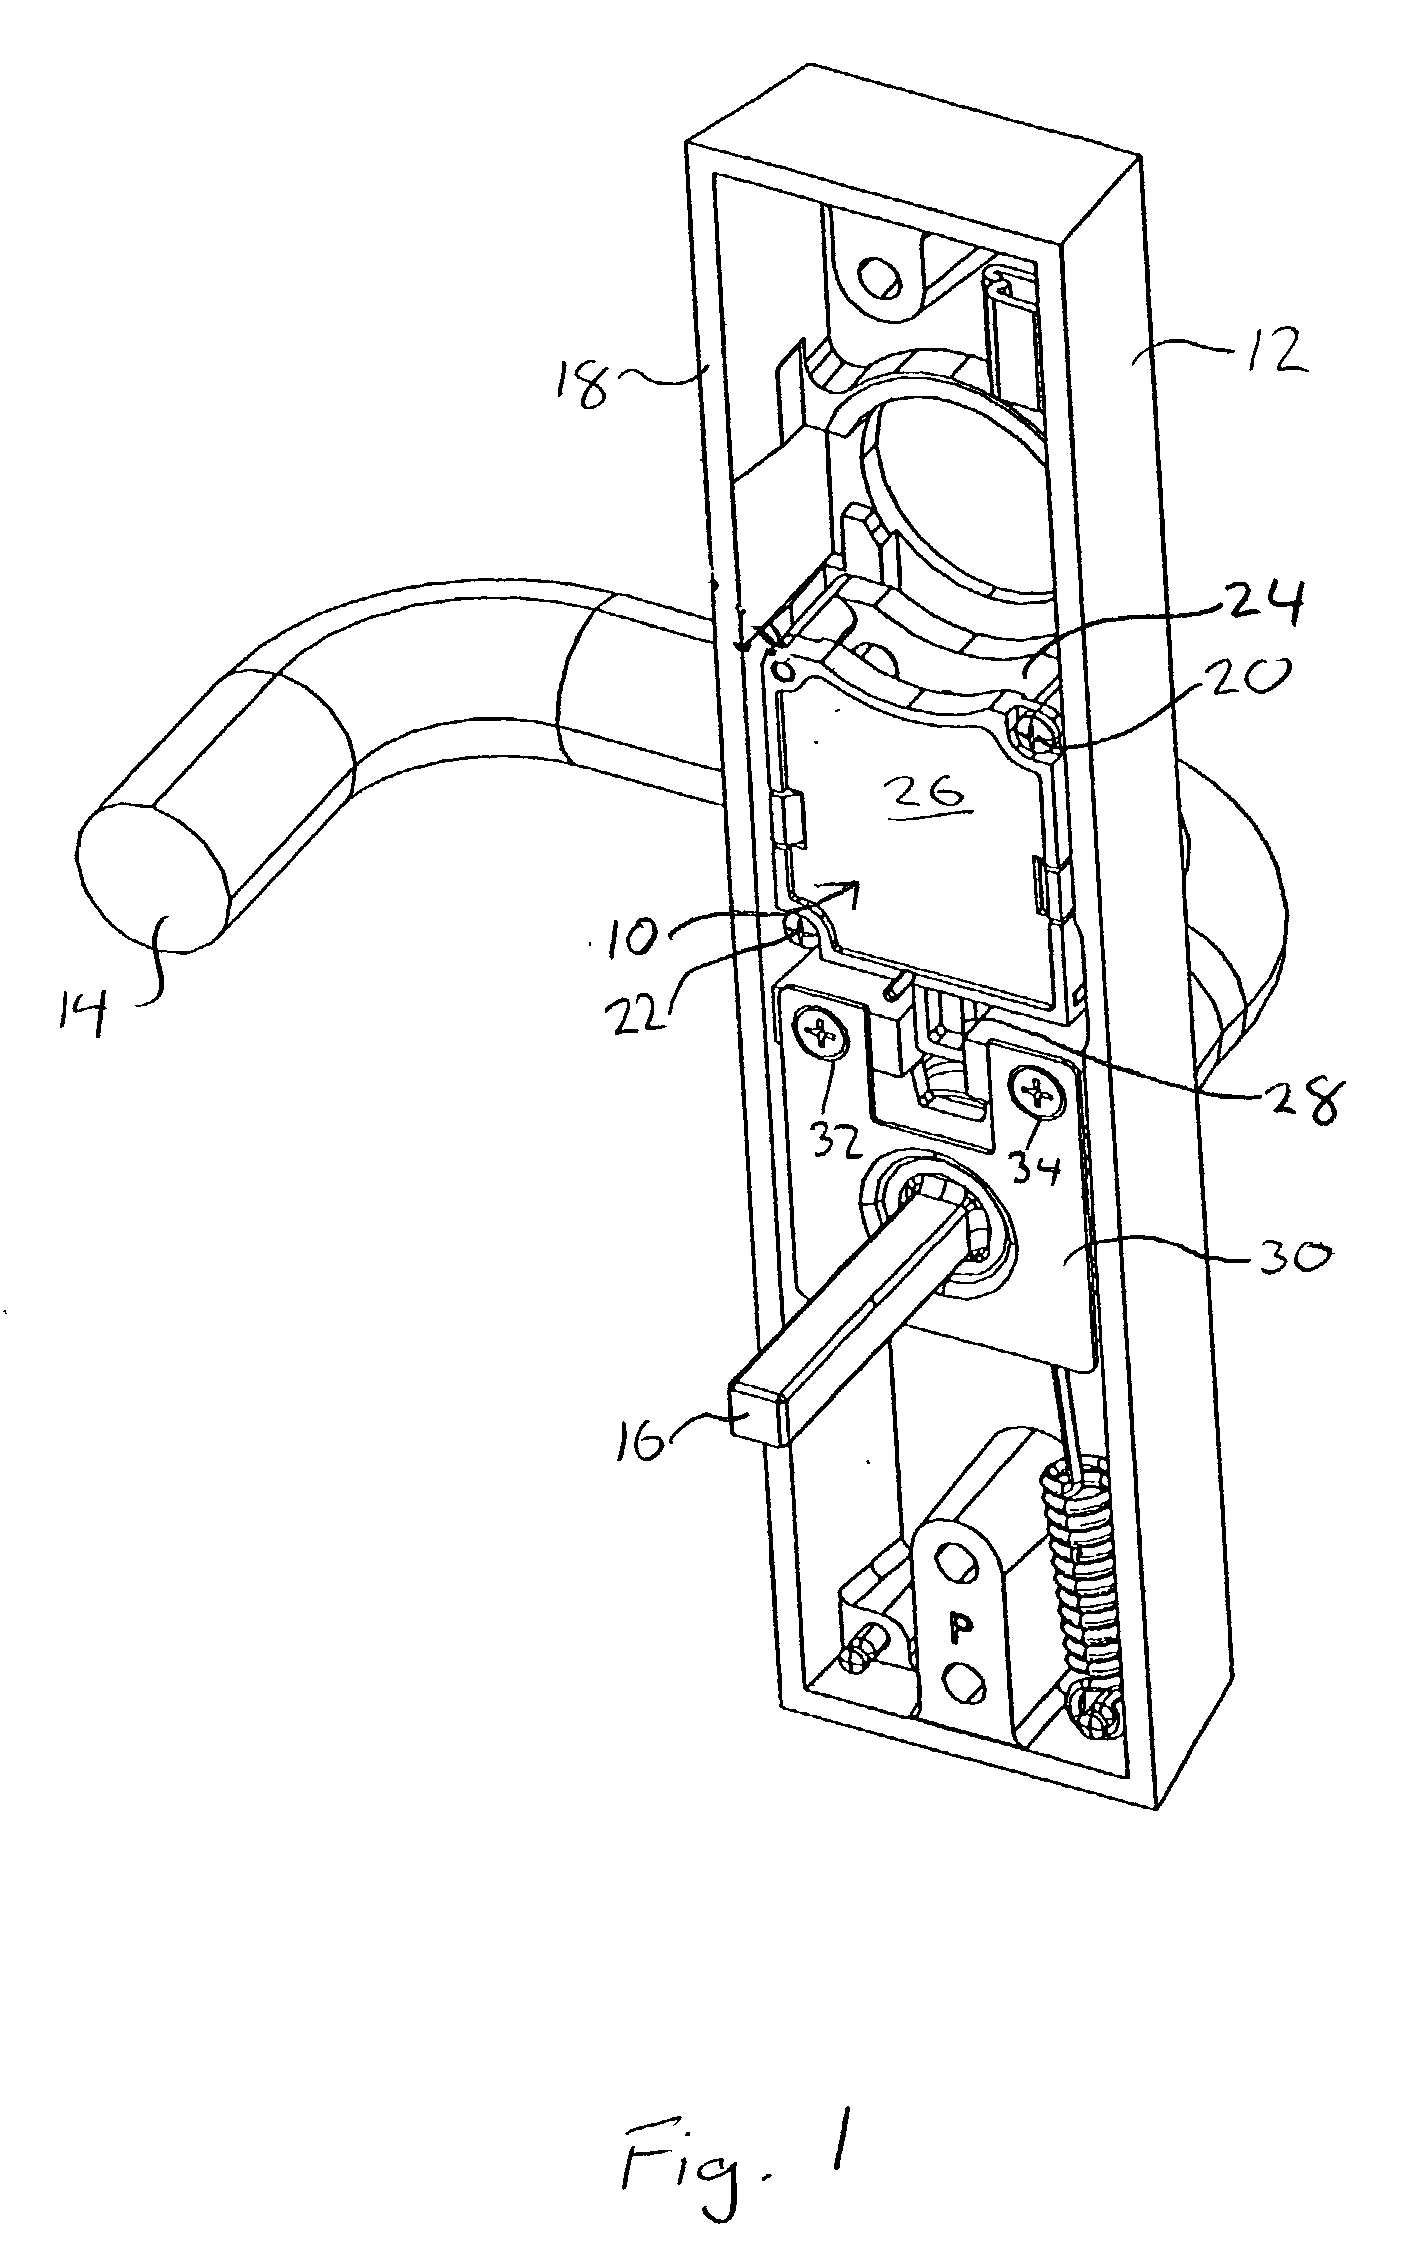 Motorized locking mechanism